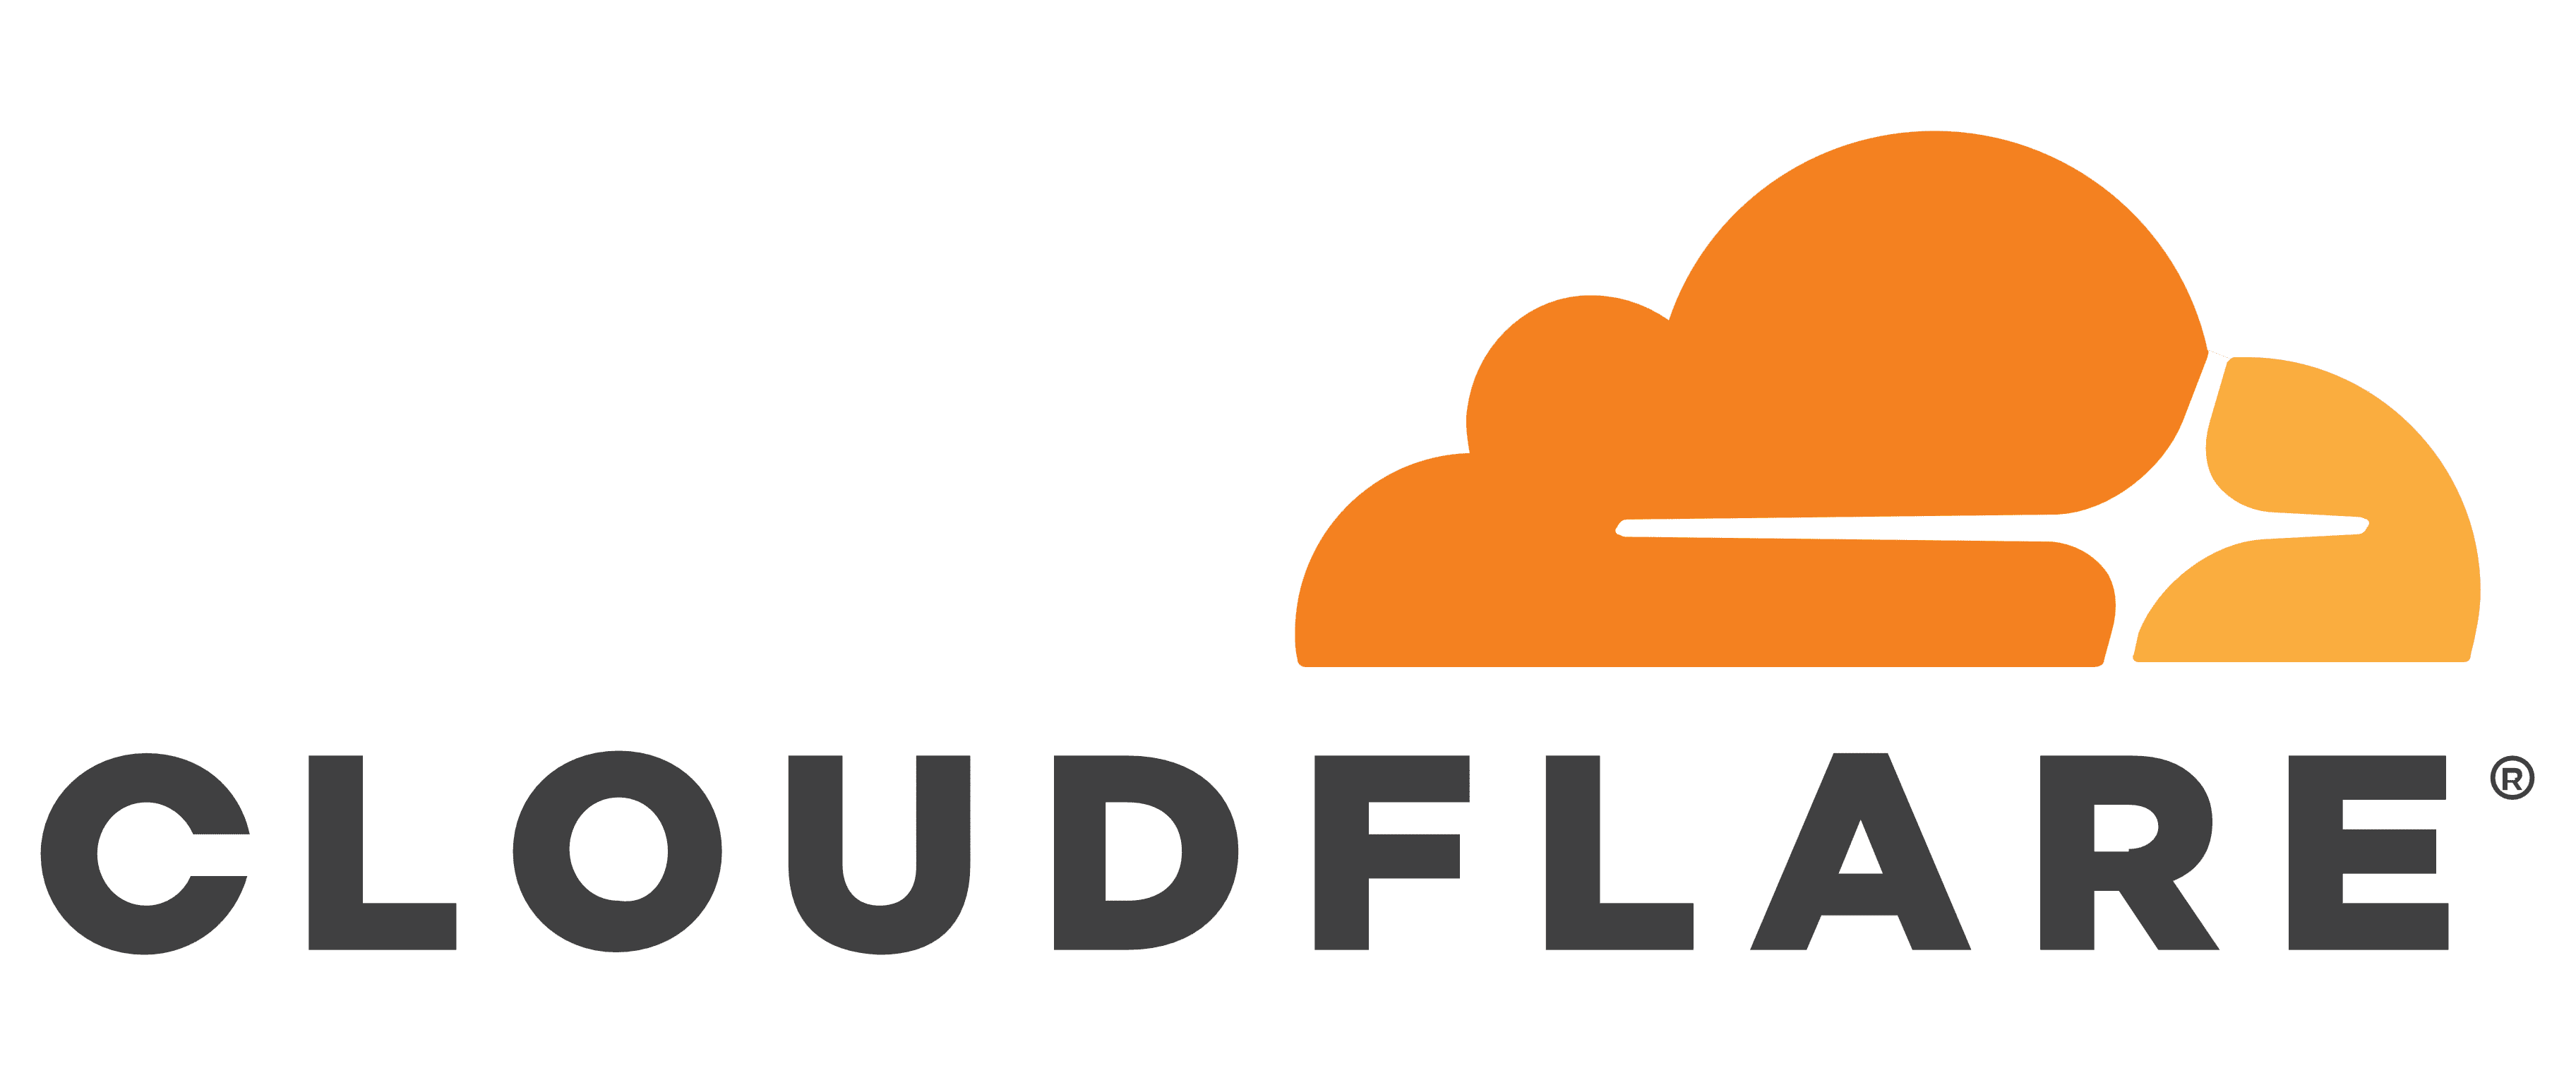 Cloudflare One으로 Cloudflare 보호
